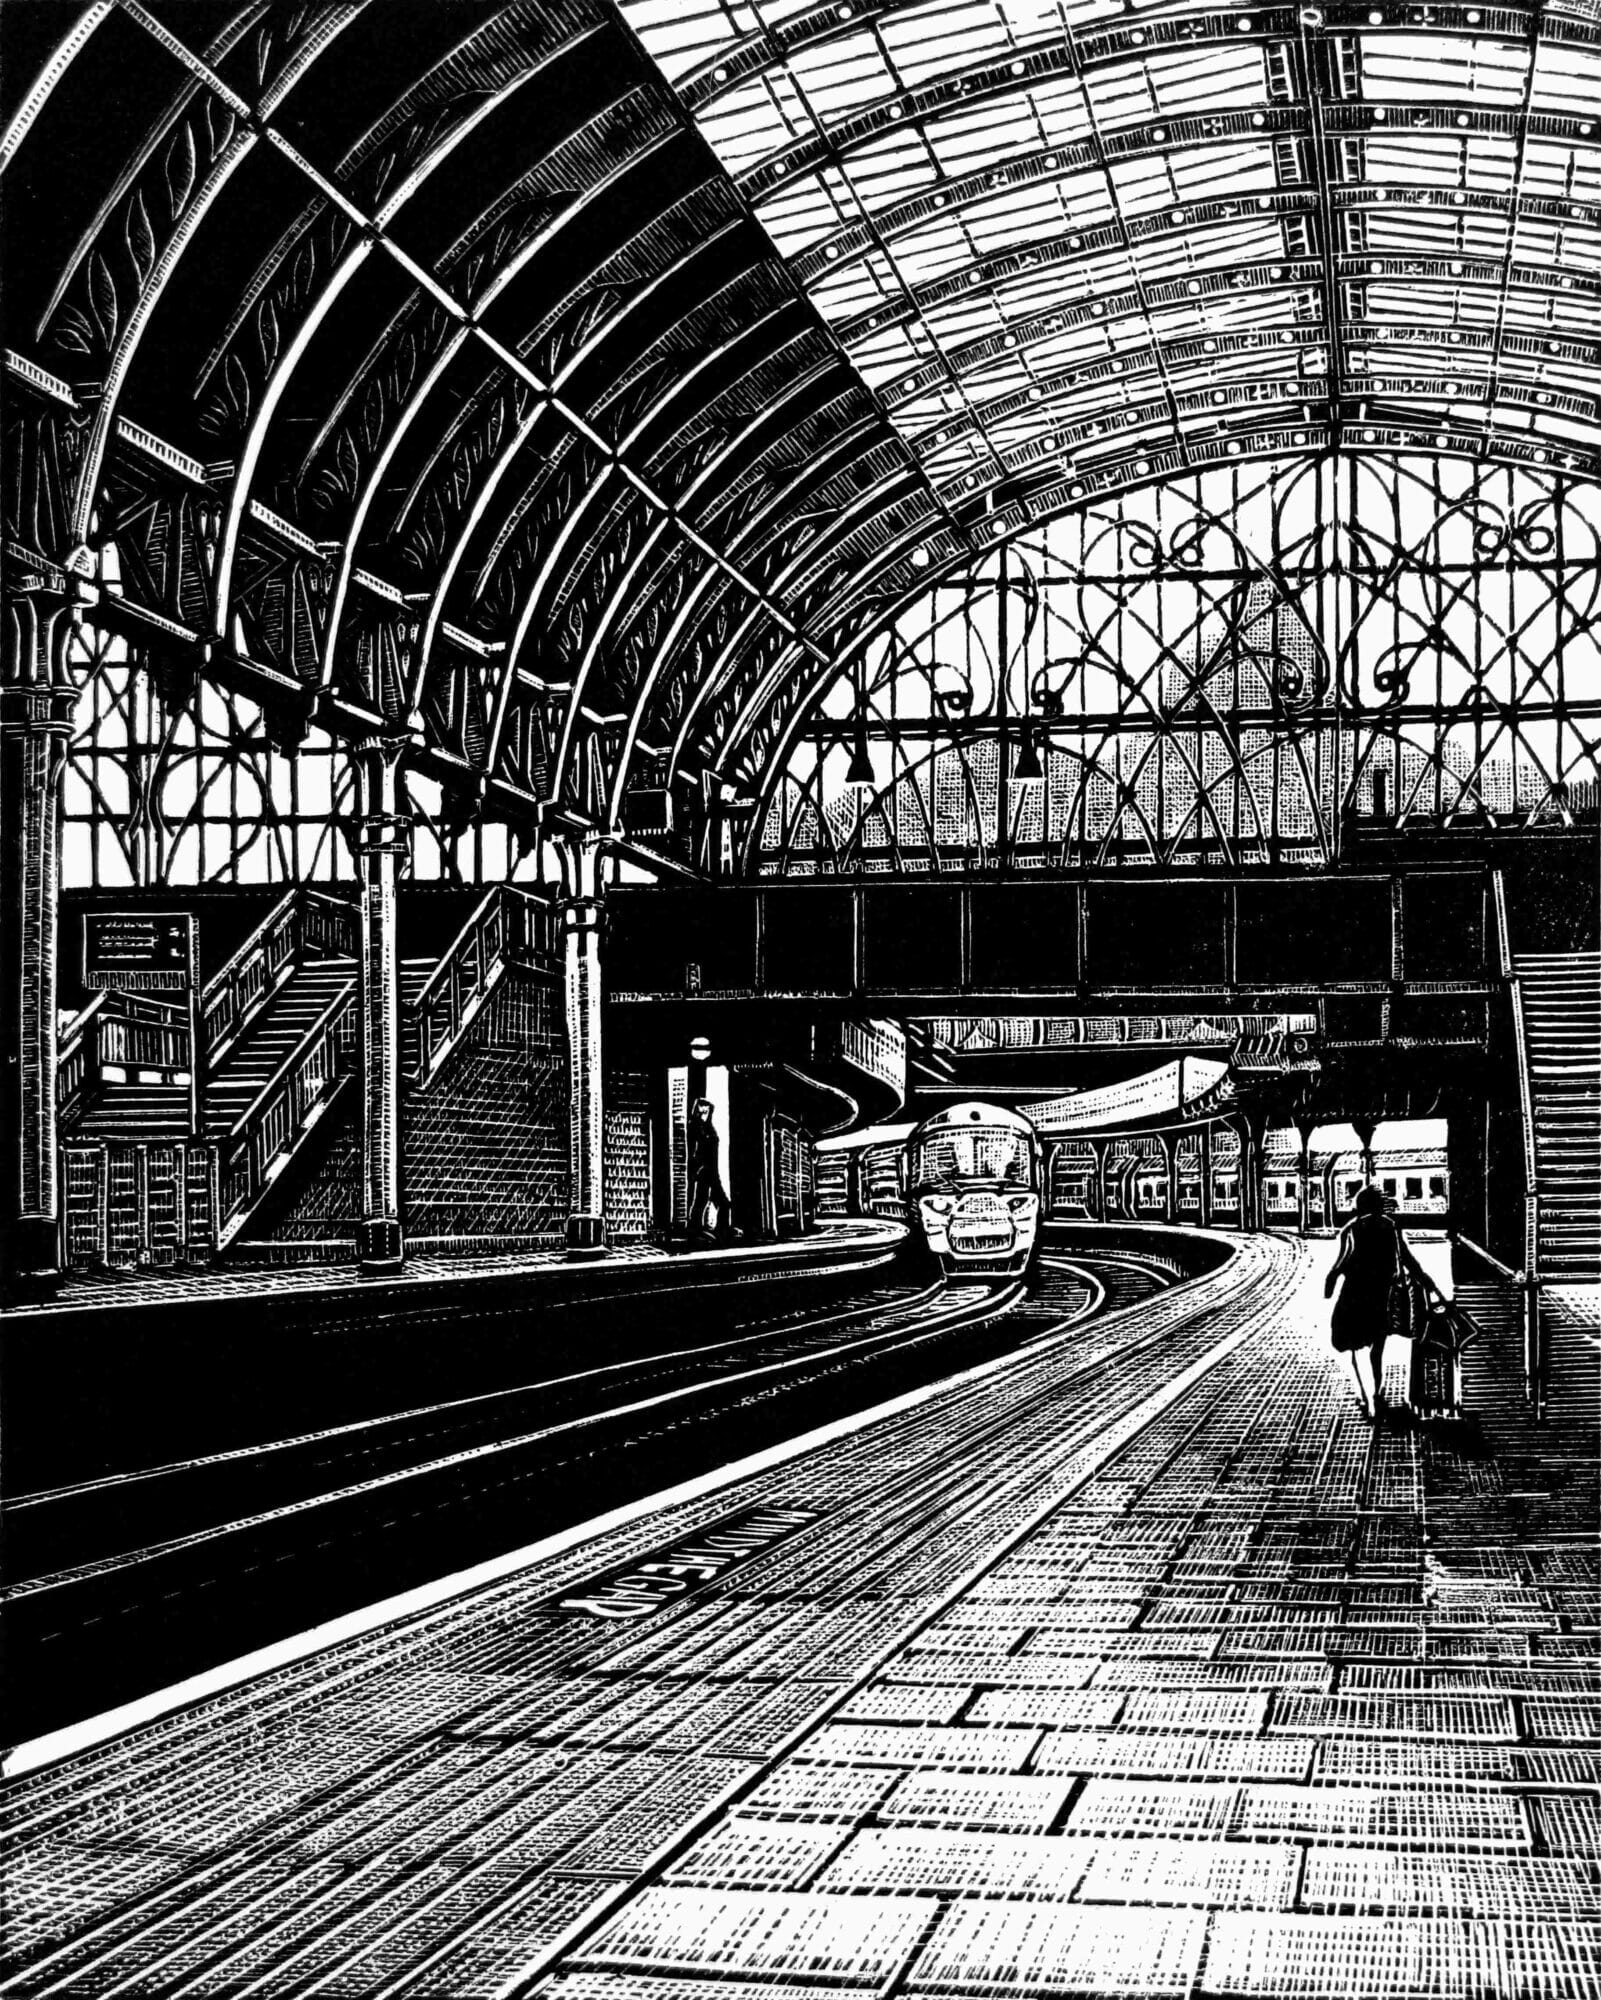  Paddington Station